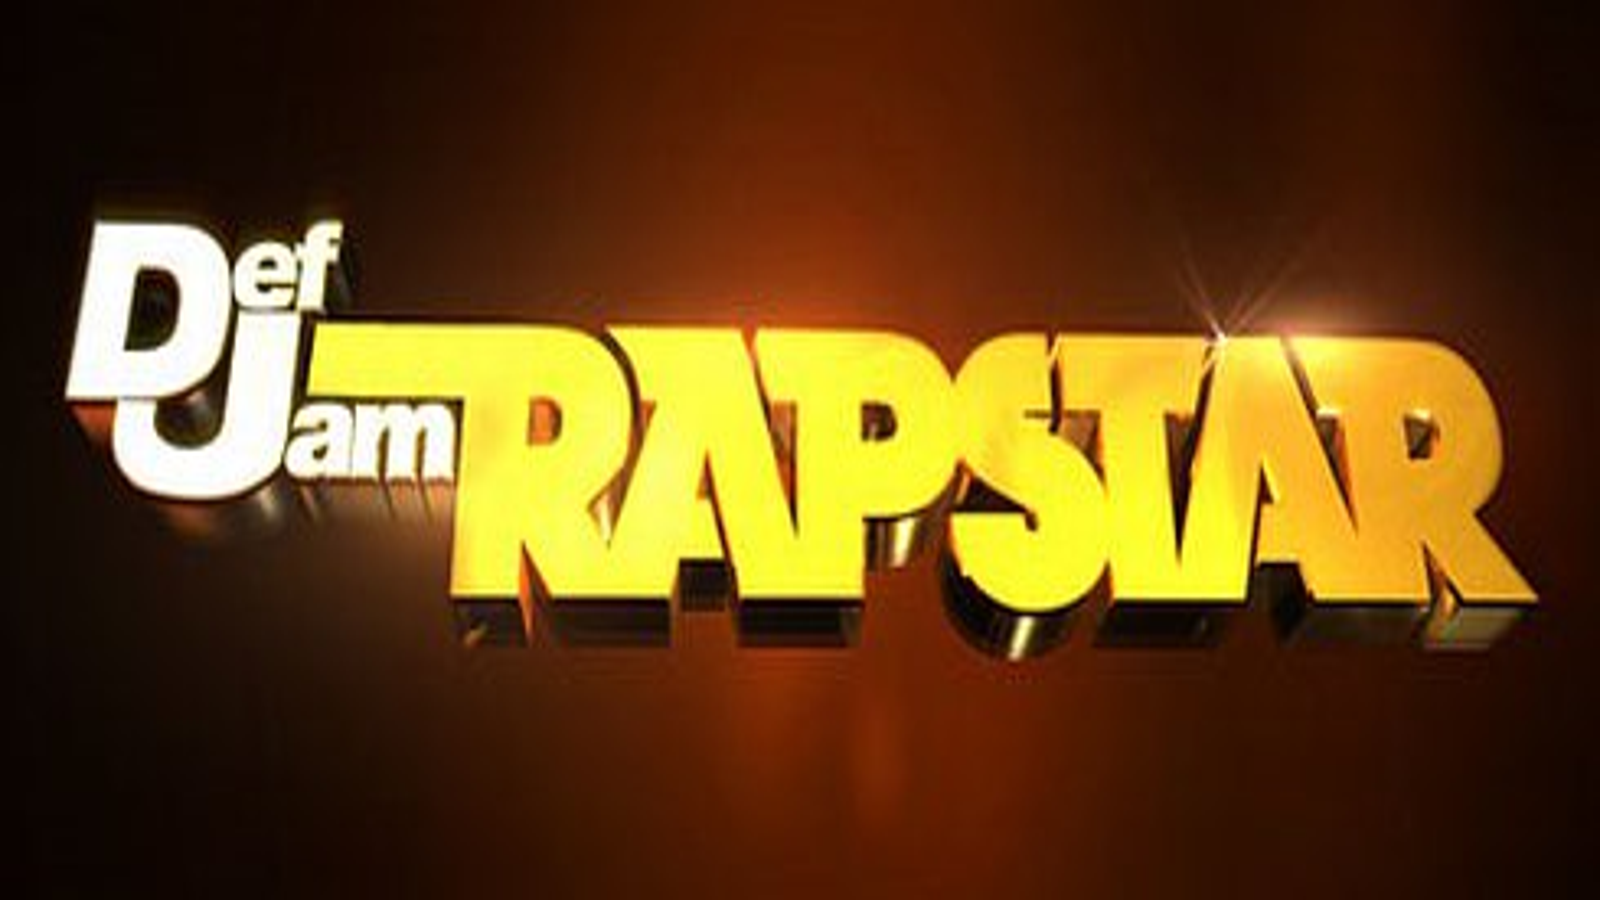 Def Jam Rapstar - Game Overview